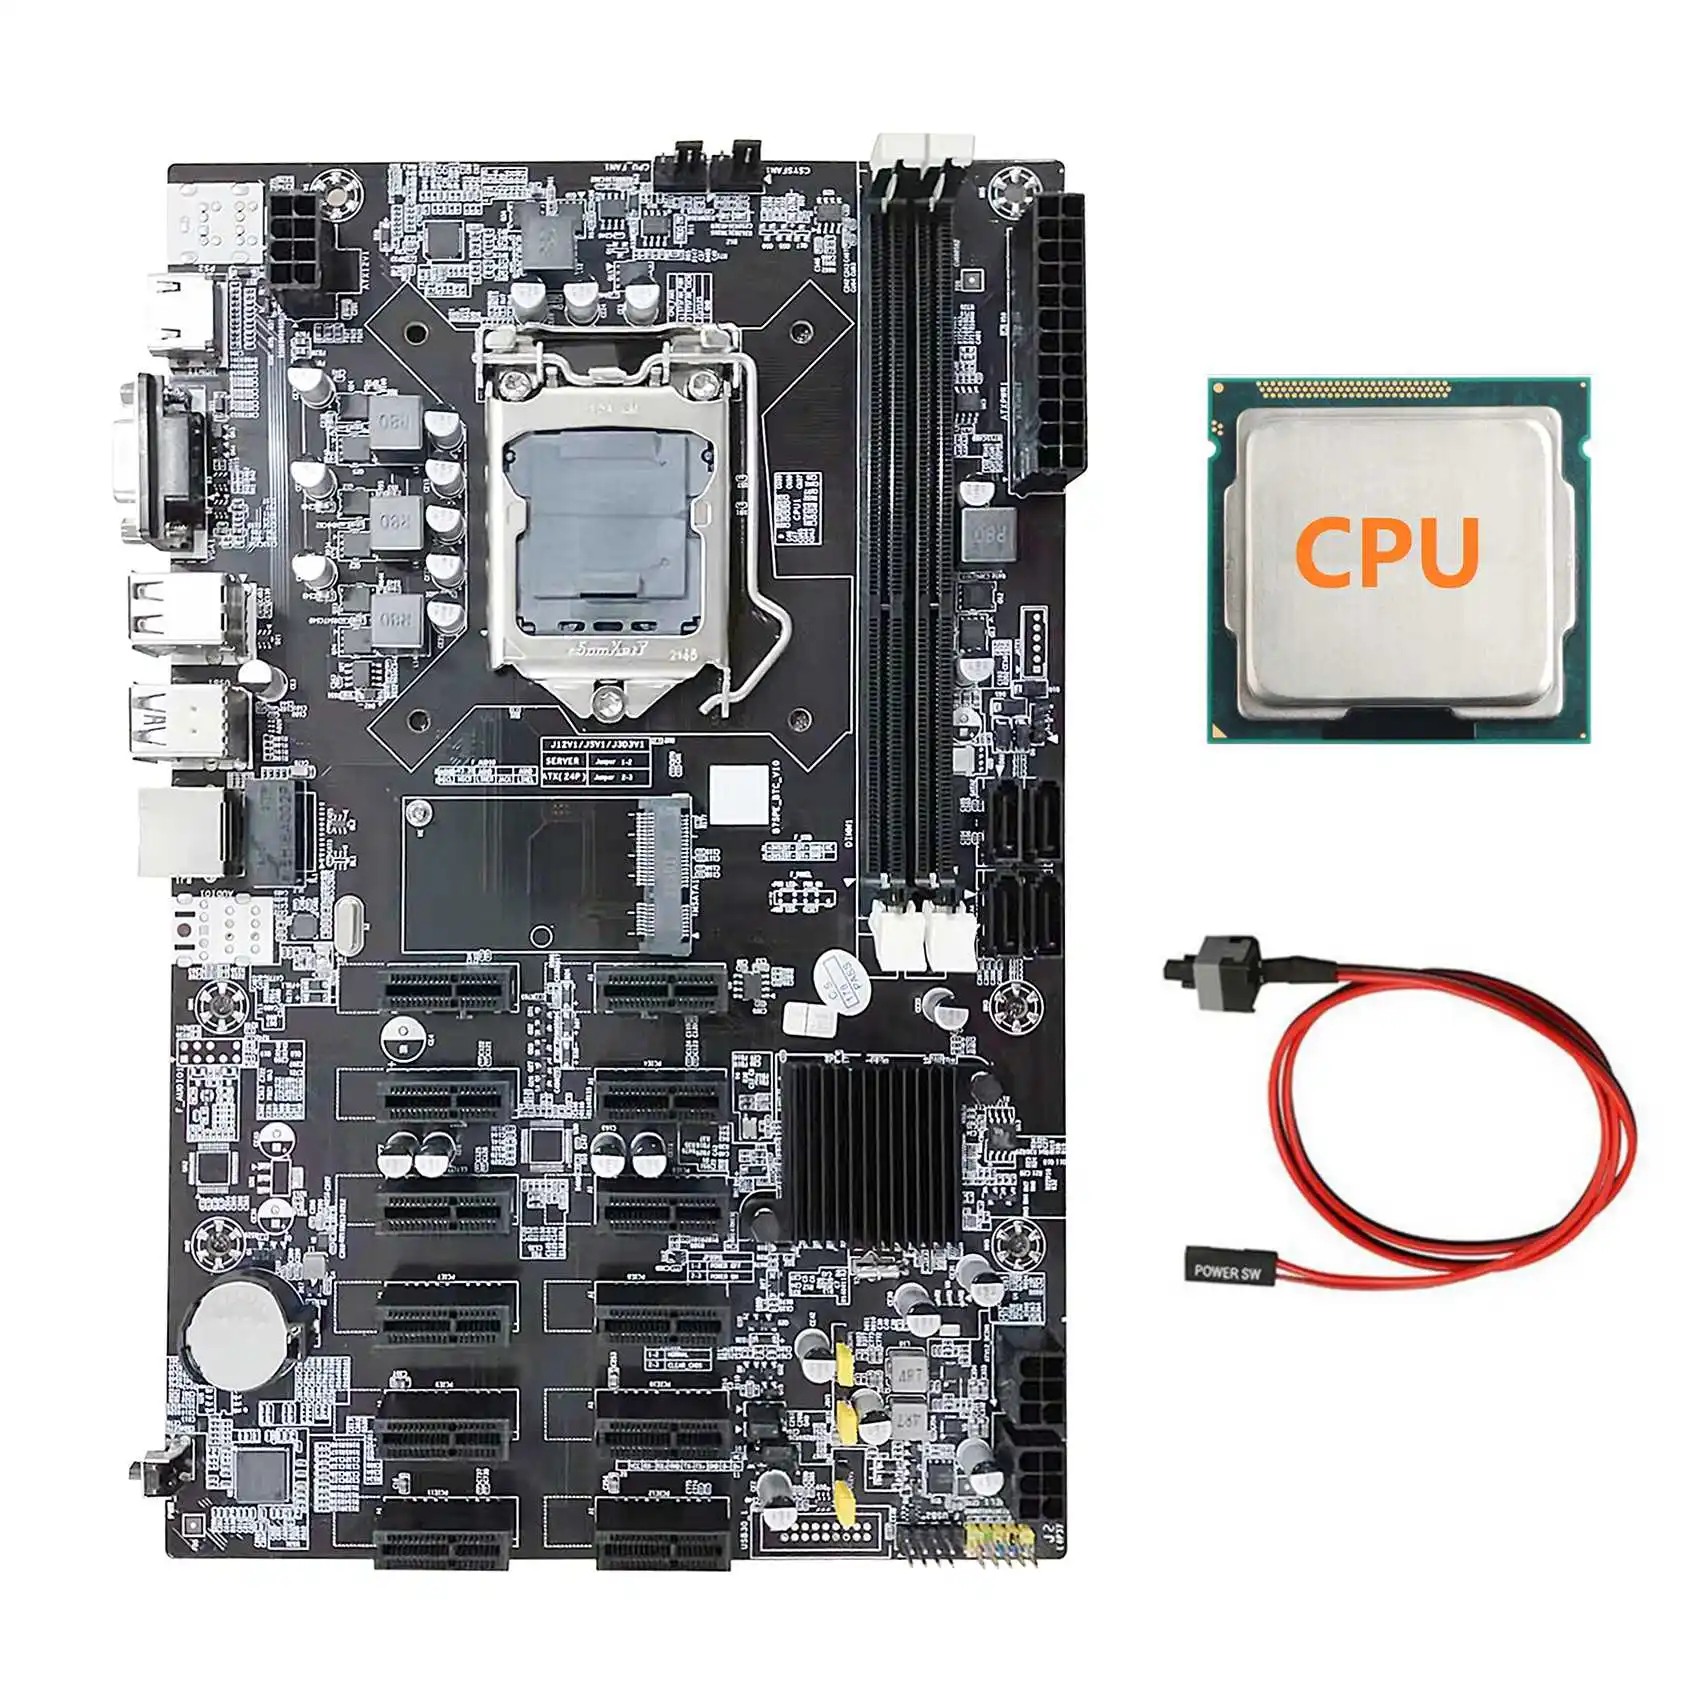 B75 12 PCIE ETH Mining Motherboard+Random CPU+Switch Cable LGA1155 MSATA USB3.0 SATA3.0 DDR3 B75 BTC Miner Motherboard